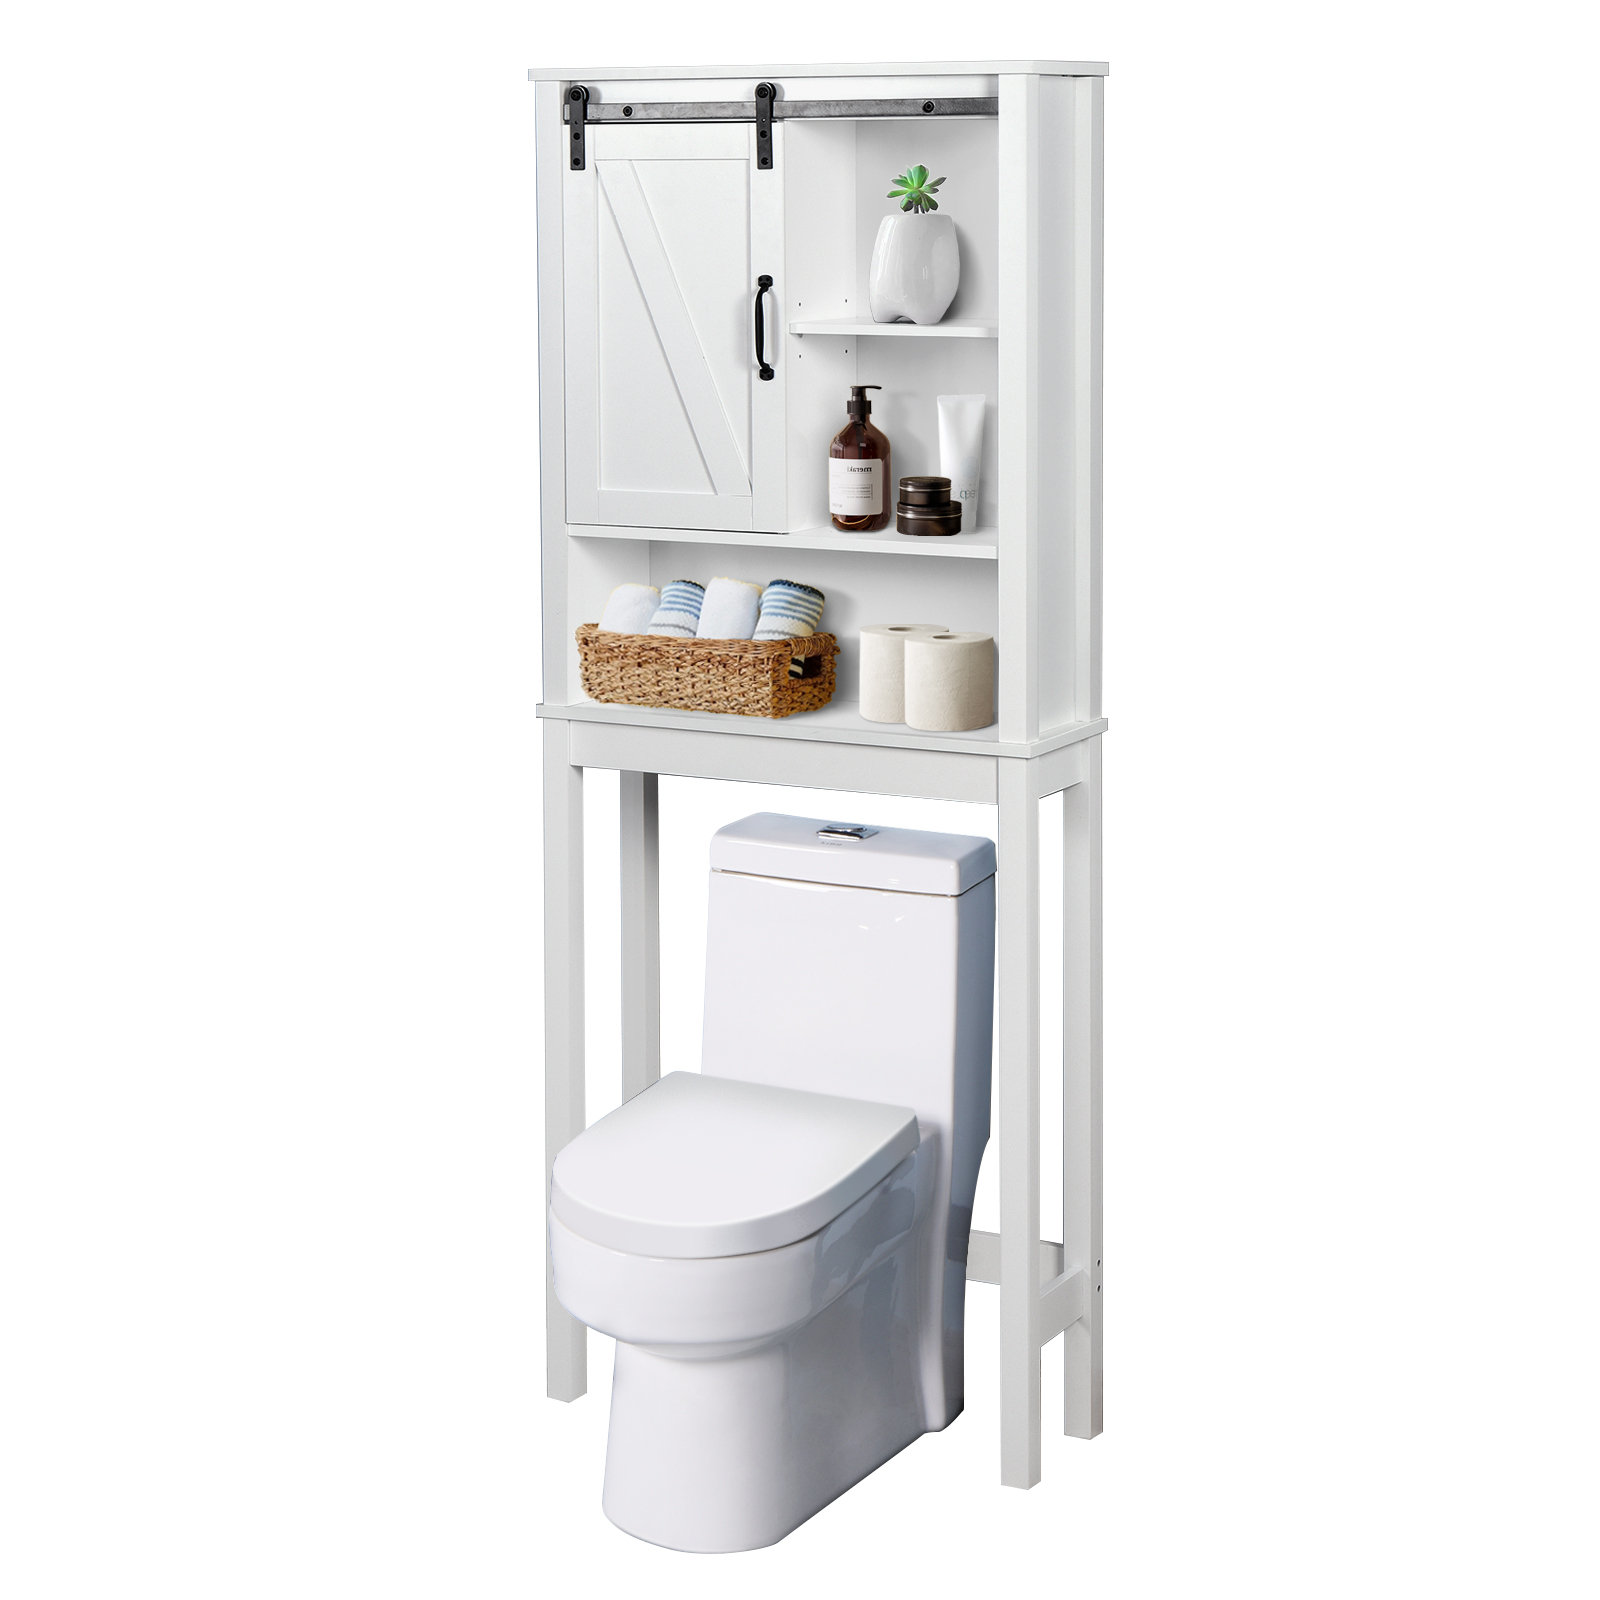 Gracie Oaks Kolsten Over-the-Toilet Storage & Reviews